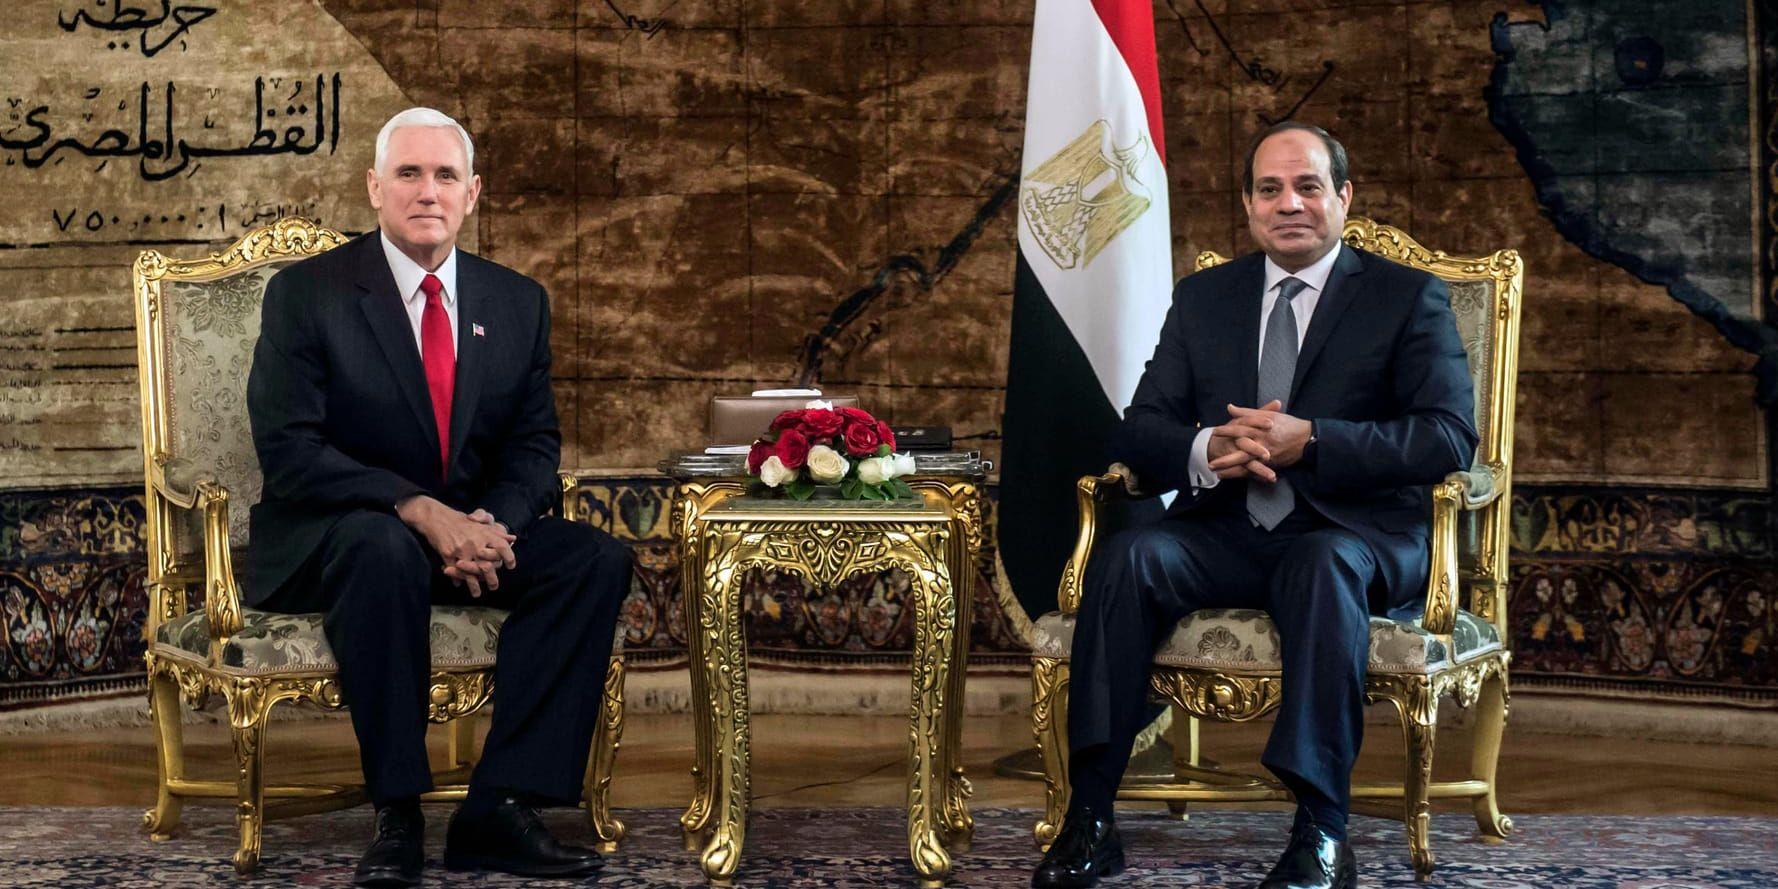 USA:s vicepresident Mike Pence möter Egyptens president Abdel Fattah al-Sisi i palatset i Kairo.